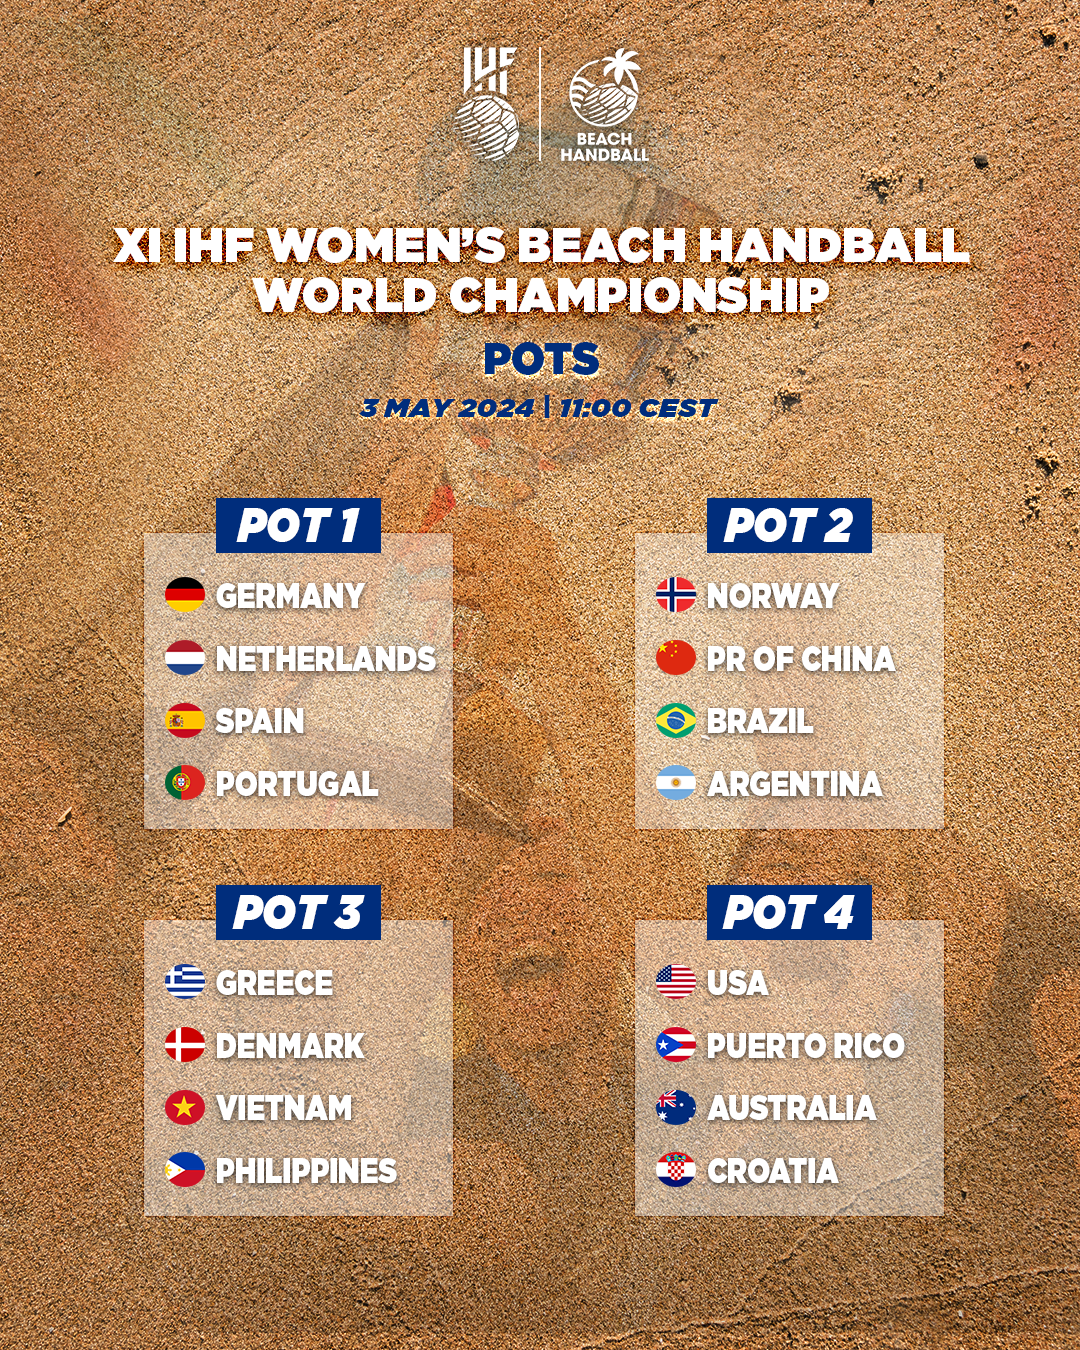 Pots for the Women's Beach Handball World Championship